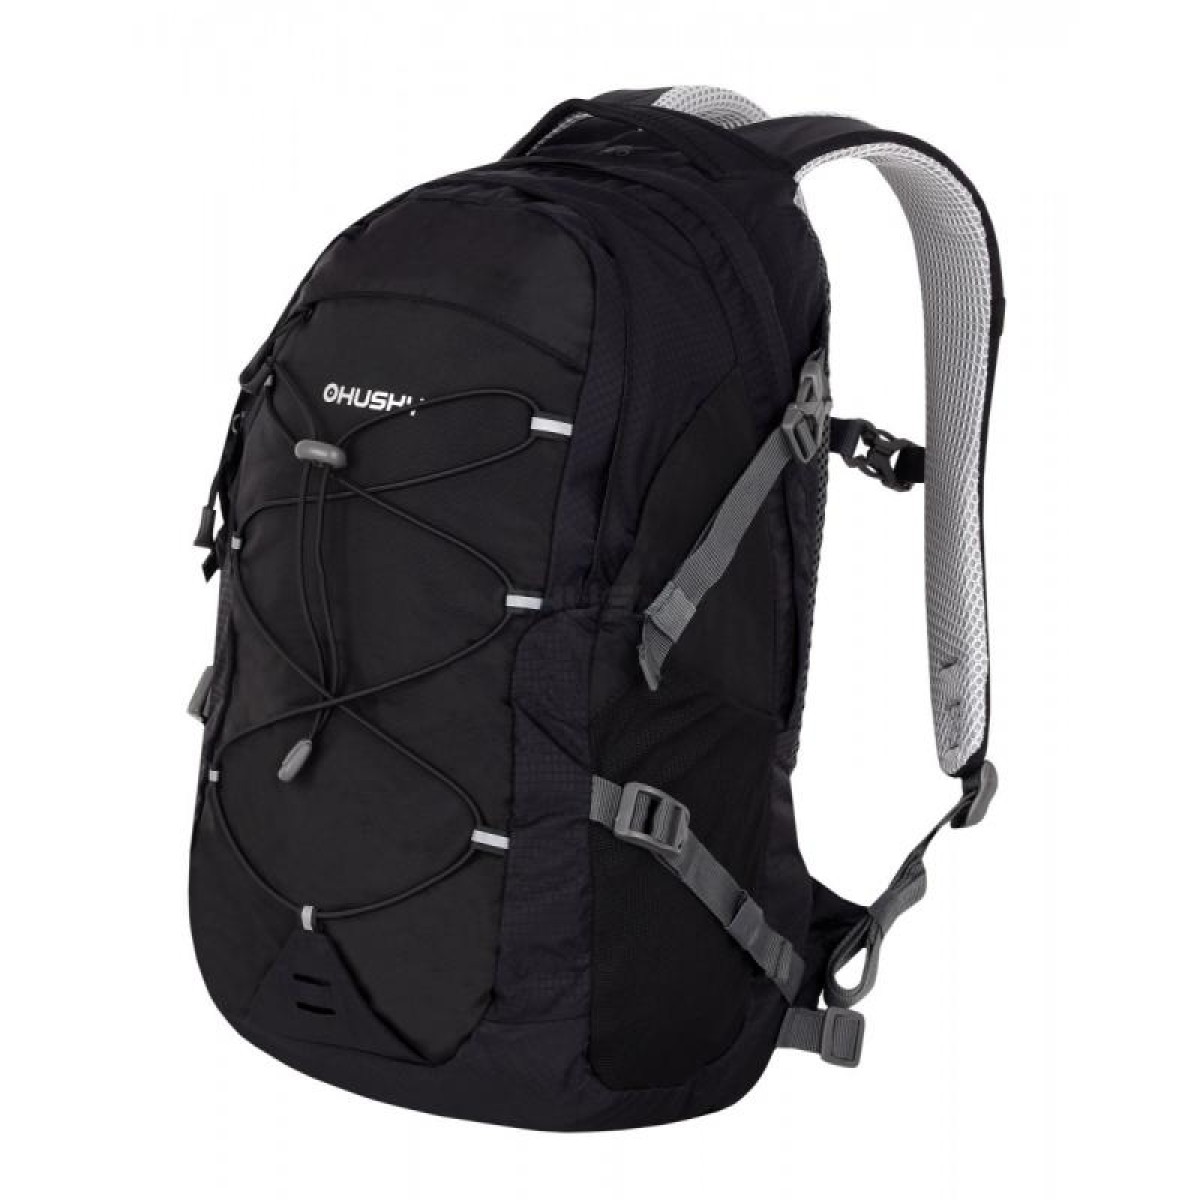 Backpack Proty 28 l black HUSKY - view 2